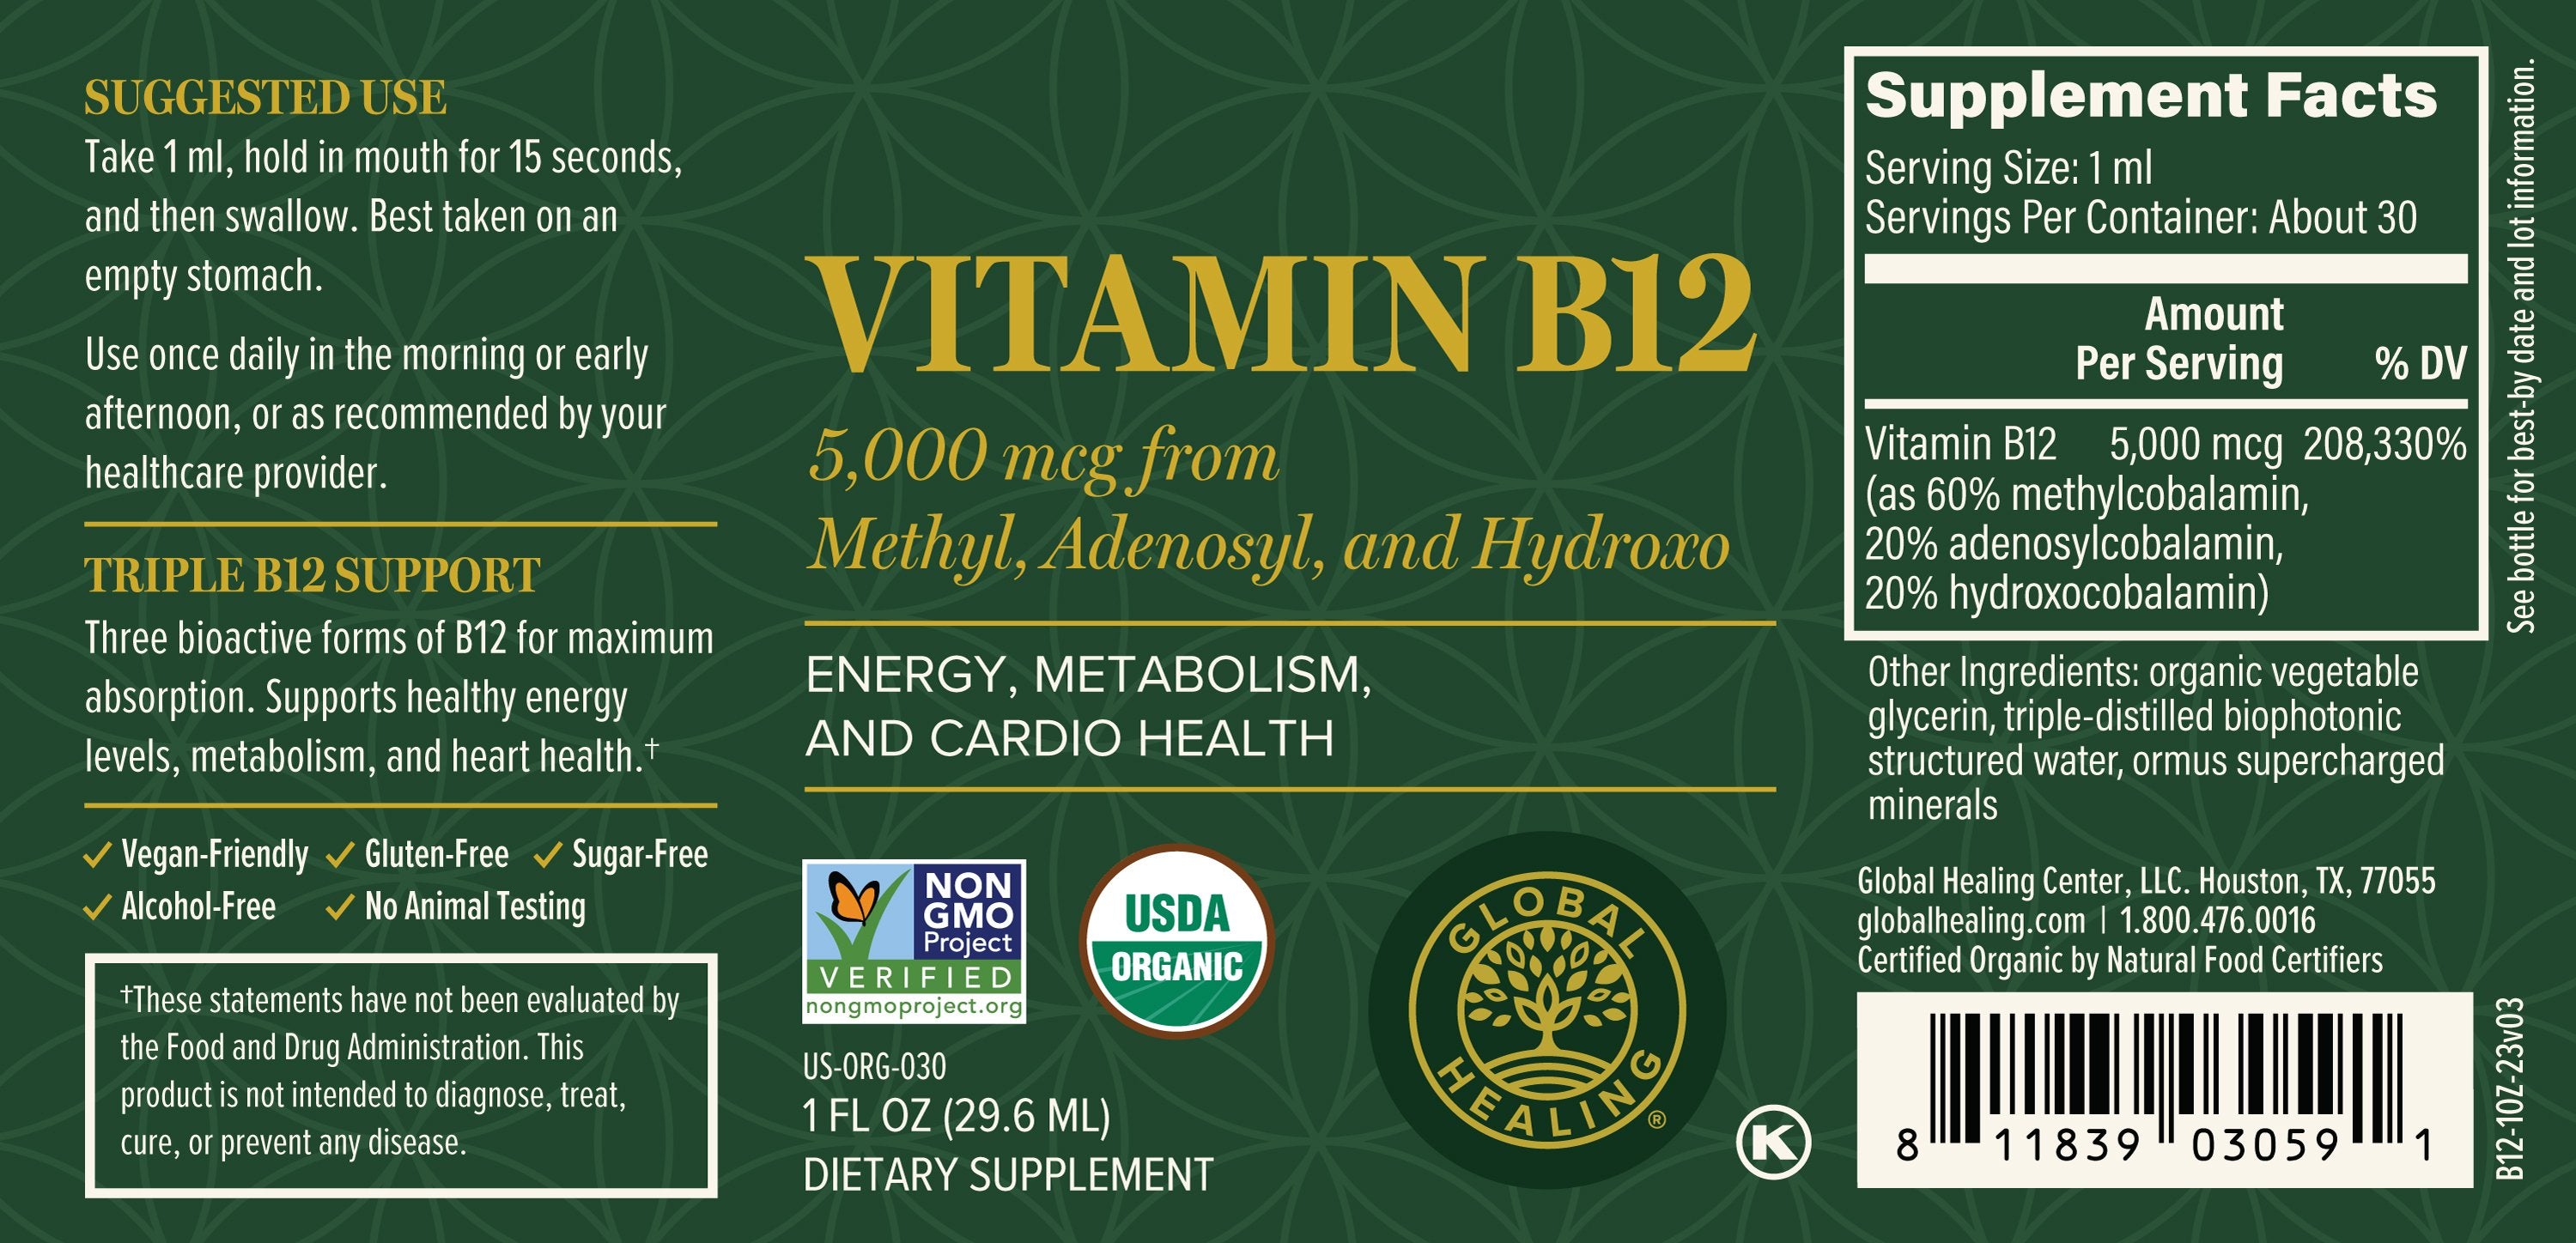 Global Healing Organic Vitamin B12 1fl Oz 29.6ml Bottle Label